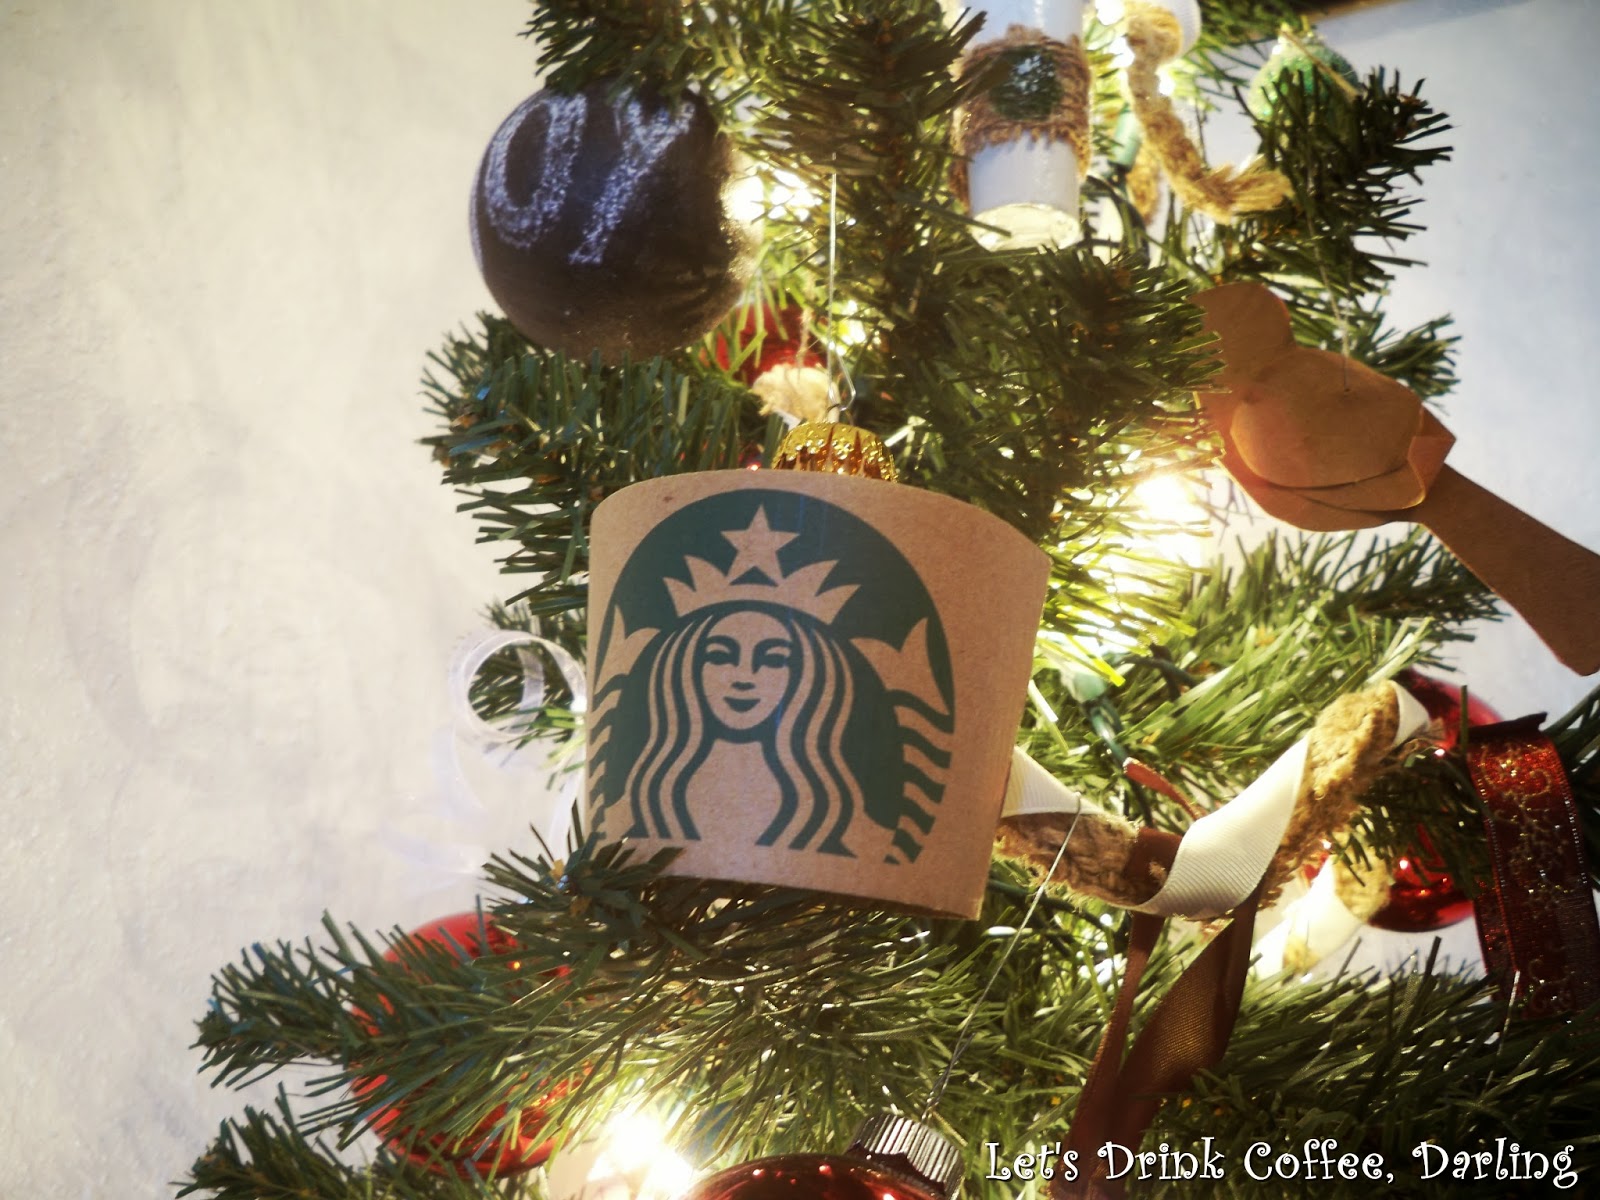 DIY Starbucks Ornament - Mrs Male's Masterpieces